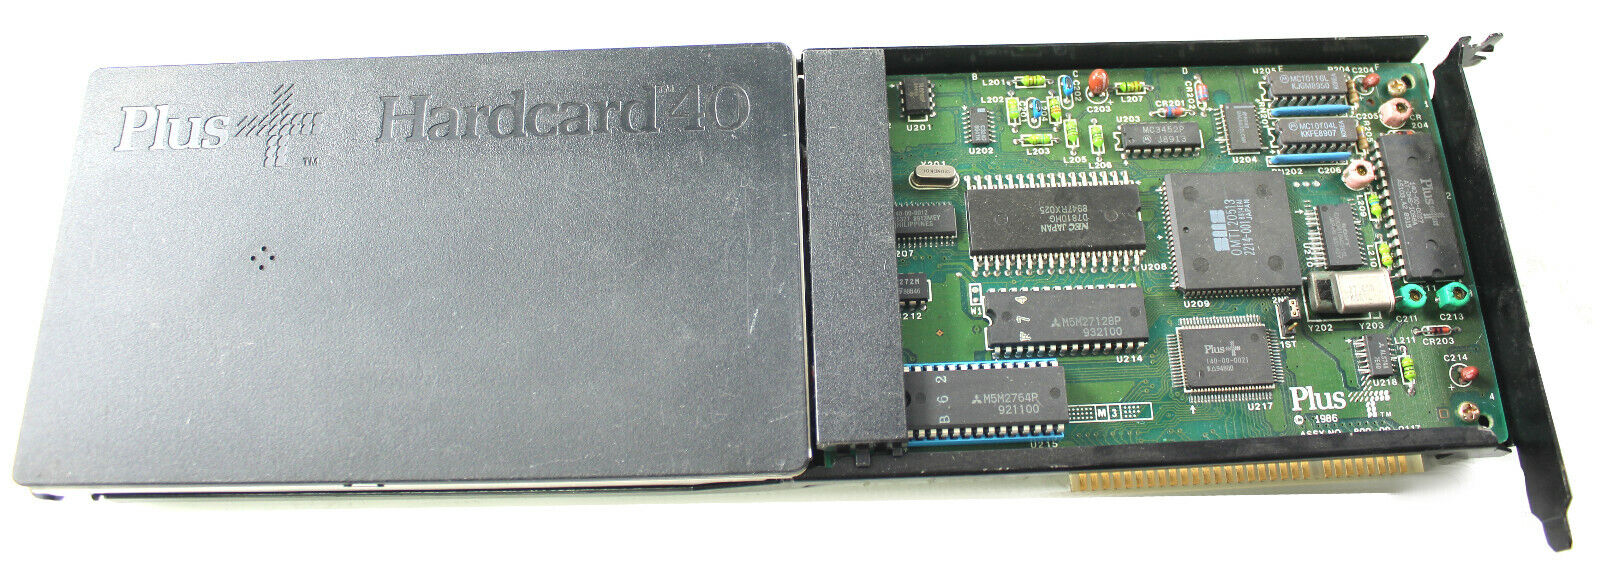 PLUS HardCard 40 800-09-0117 For IBM PC